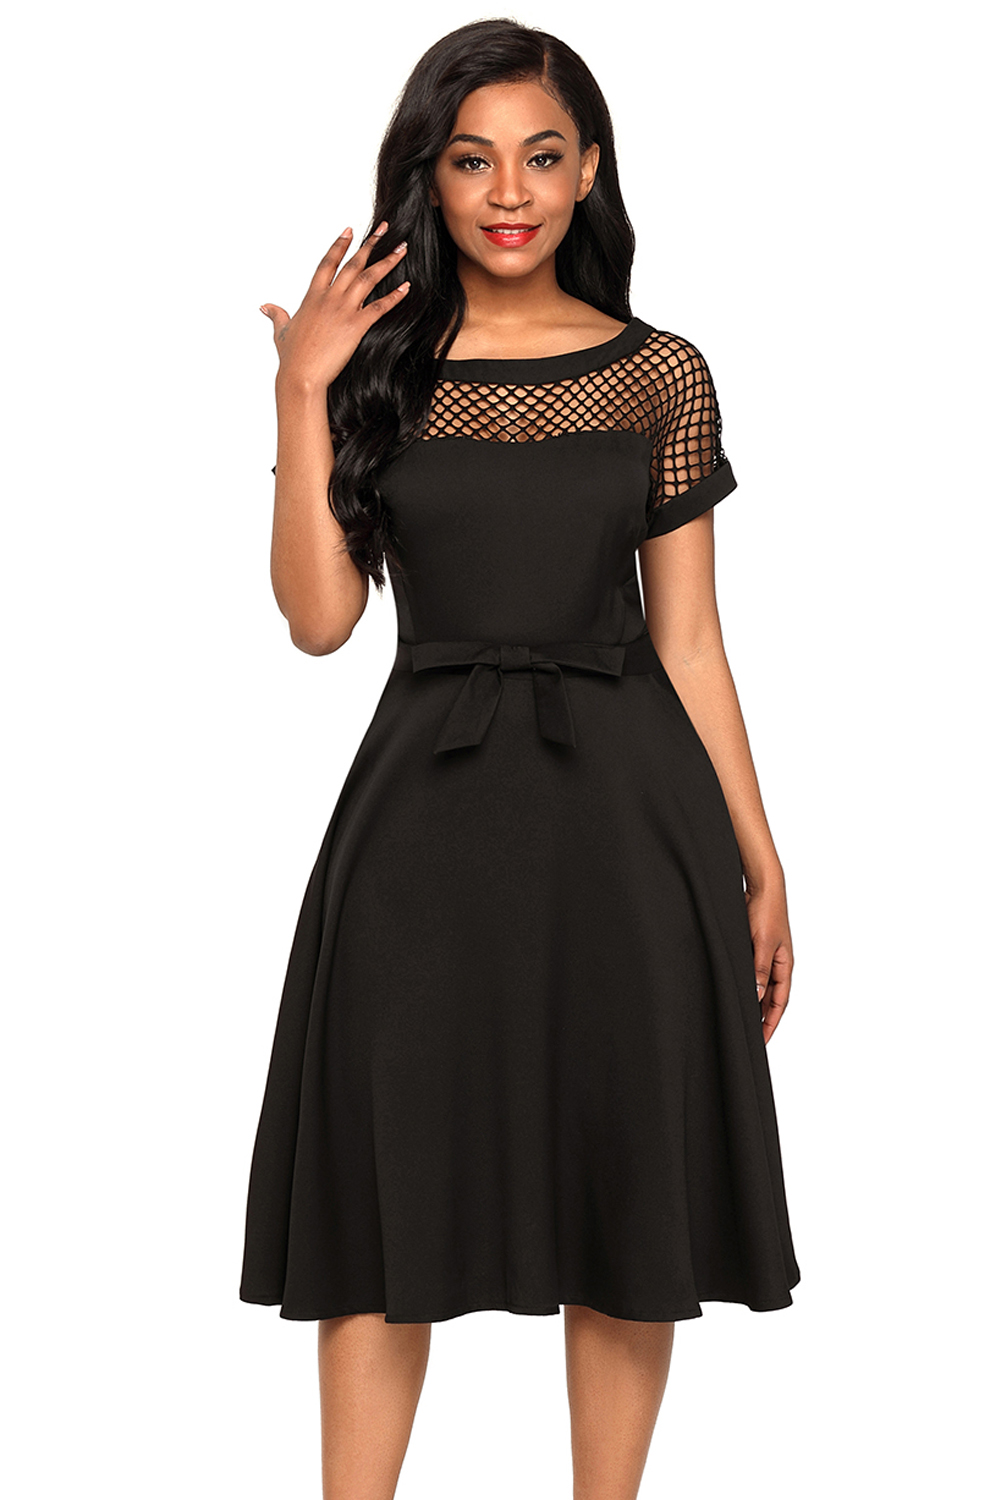 BY61862-2 Fishnet Insert Black Bowknot Embellished Dress